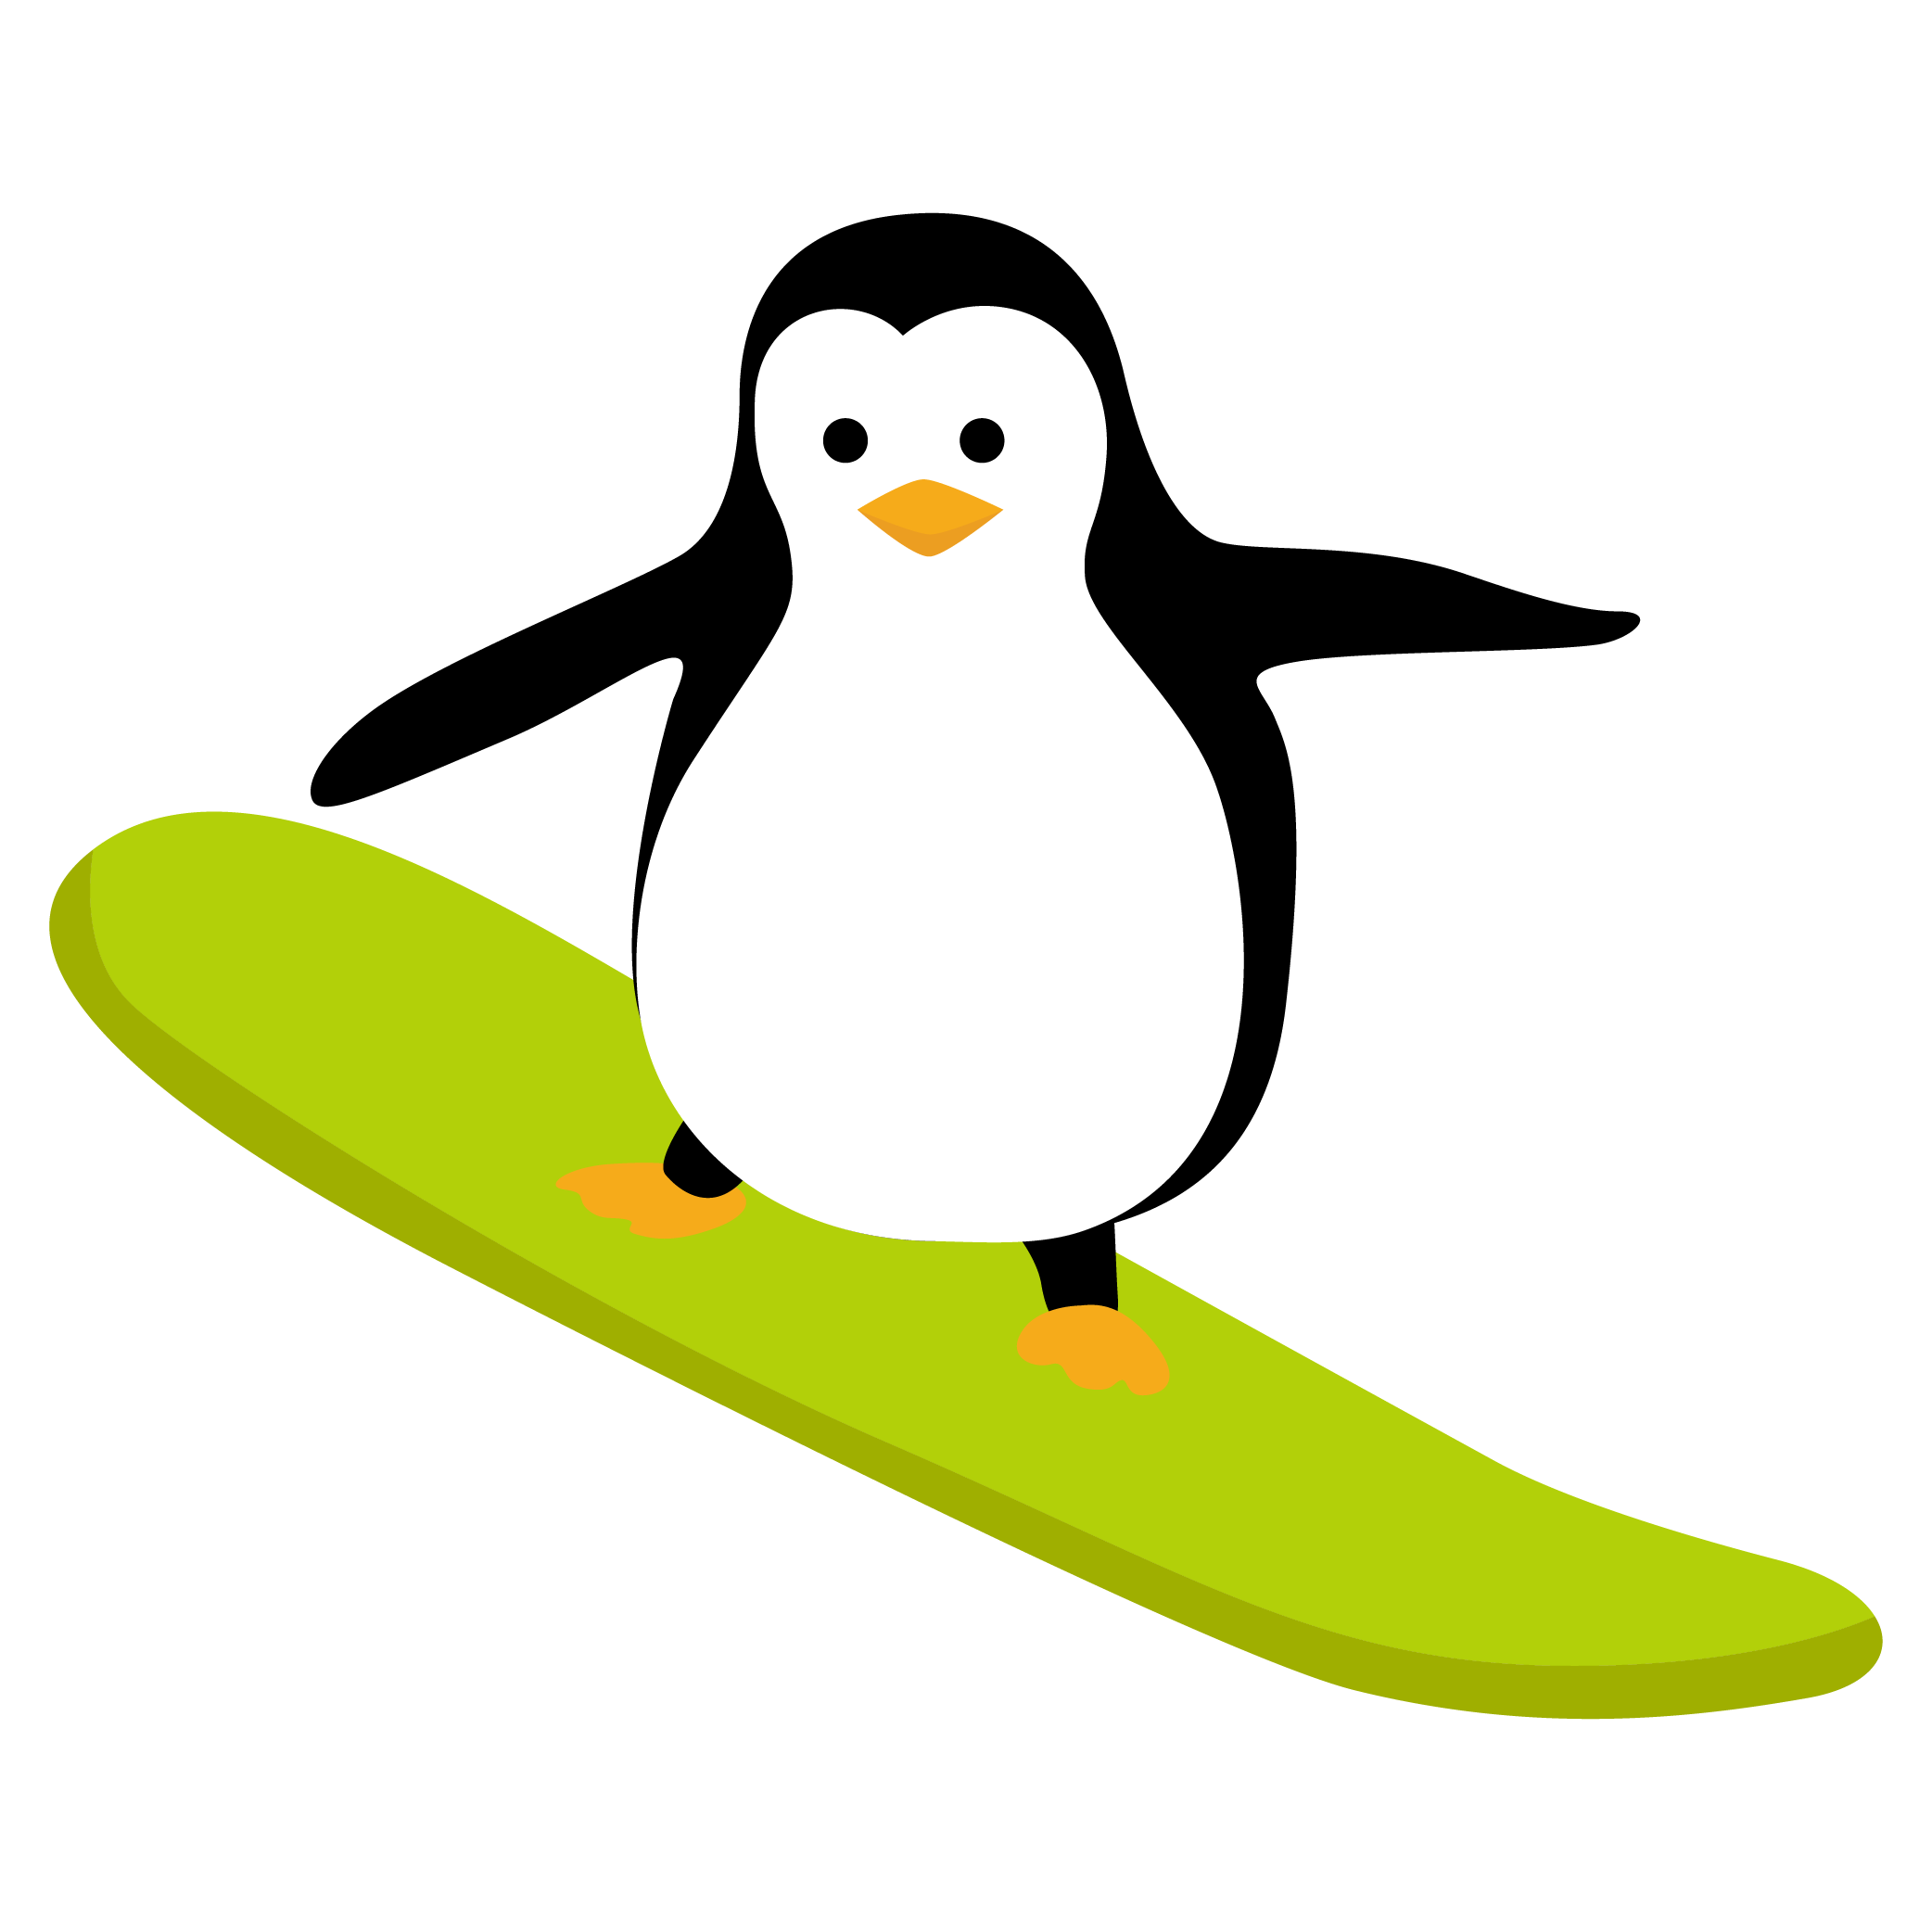 Penguin on a Surfboard